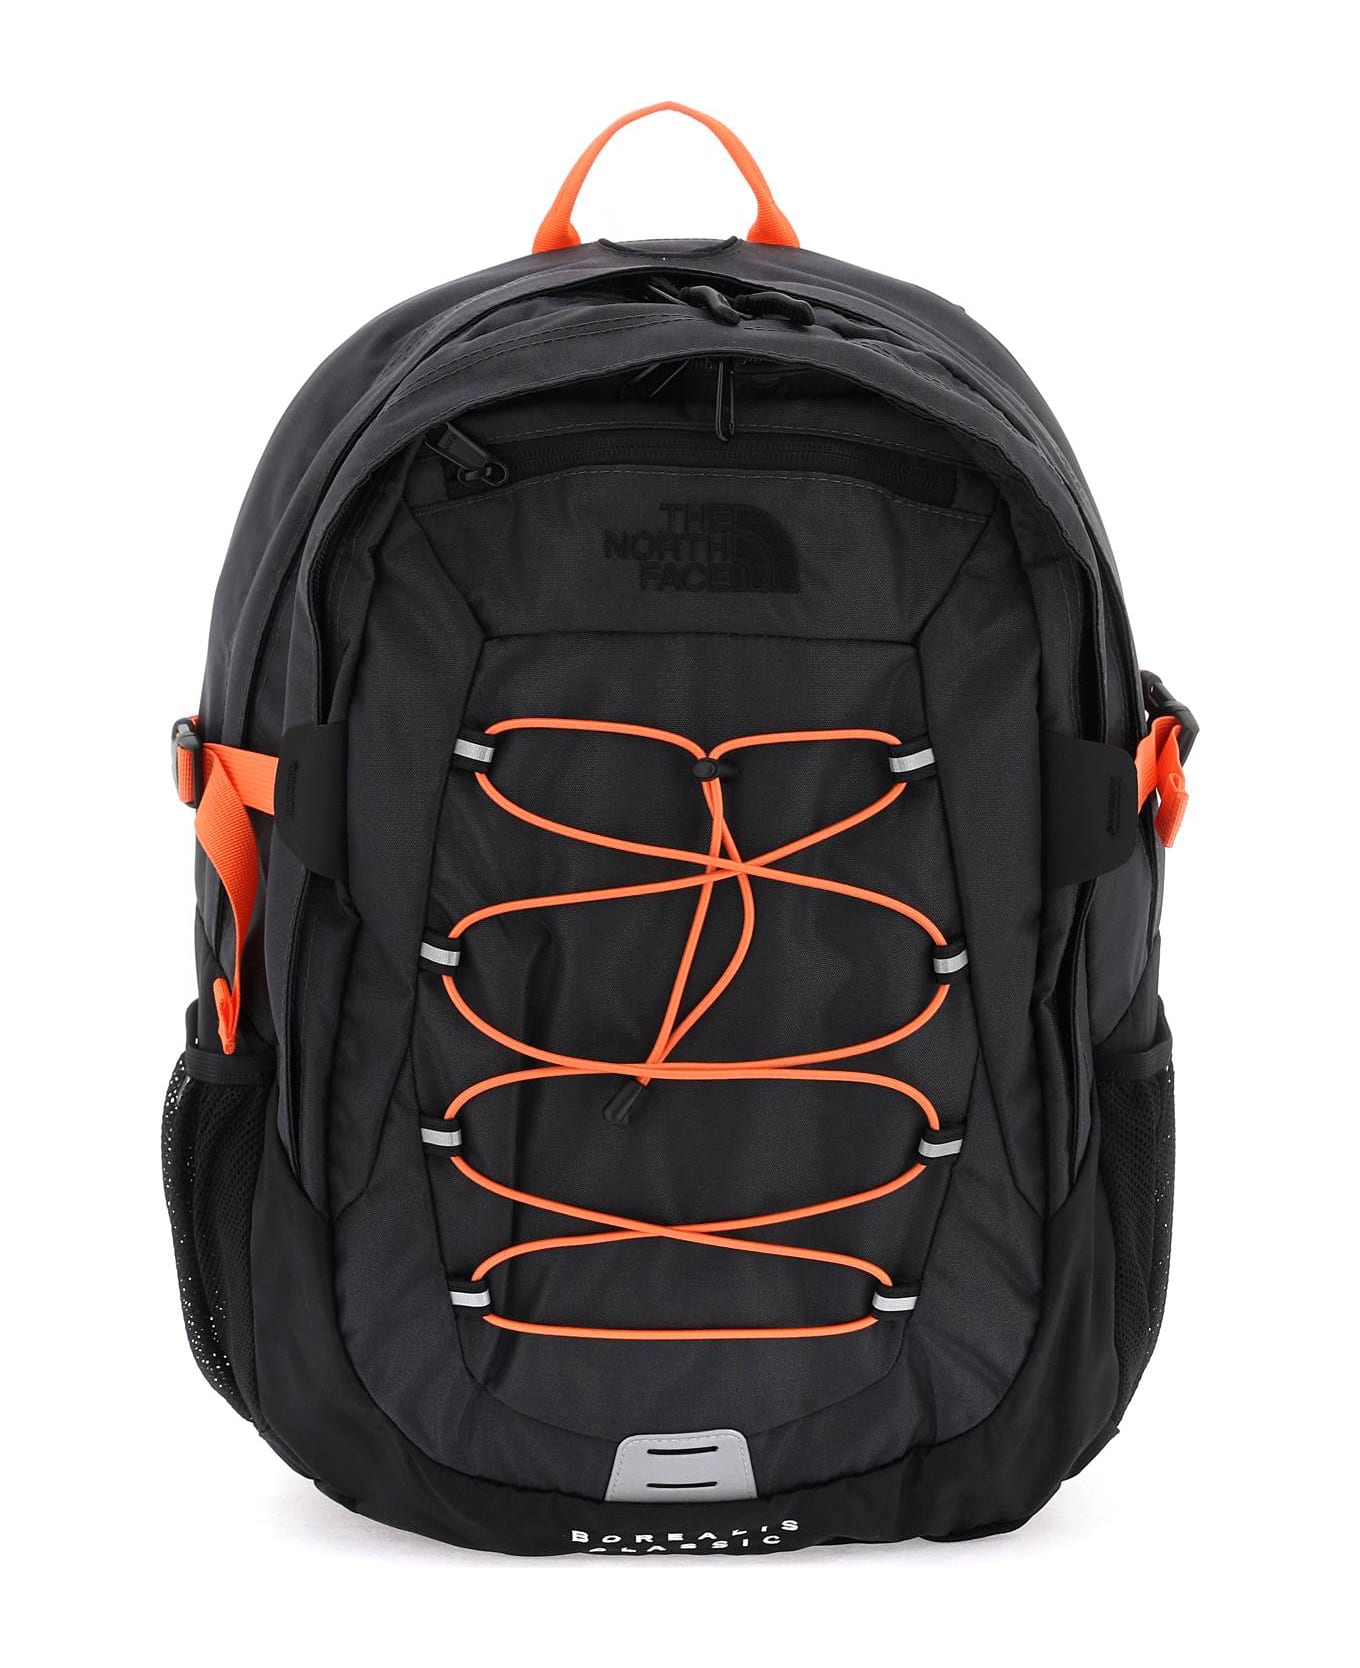 The North Face Borealis Classic Backpack - ASPHALT GREY RETRO ORANGE (Black)